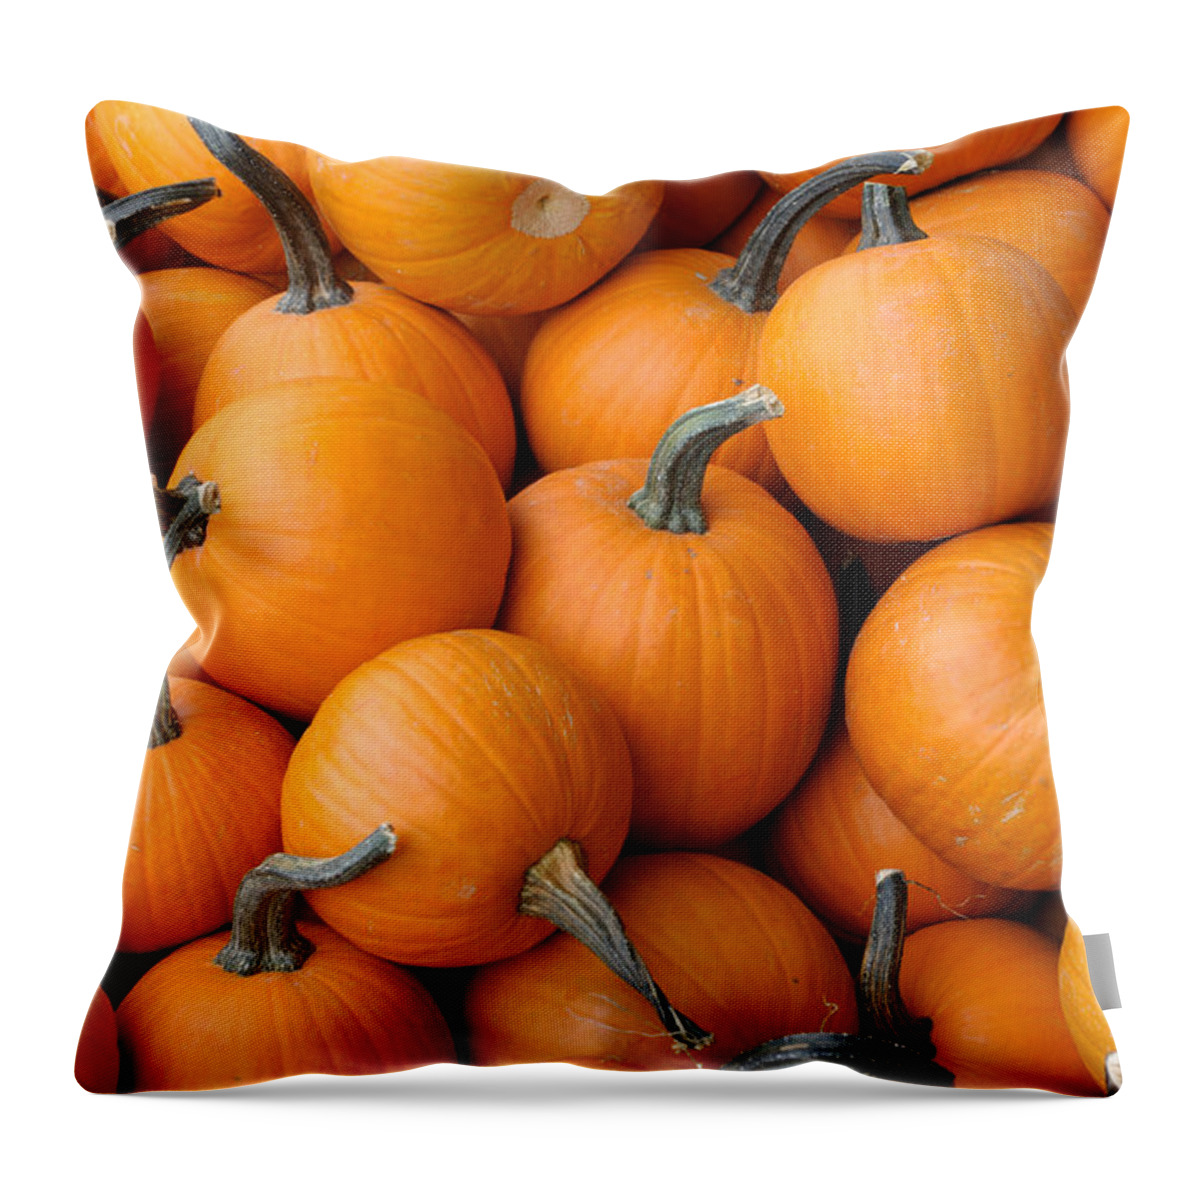 Pumpkin Throw Pillow featuring the photograph Pile of pumkins by Bradford Martin